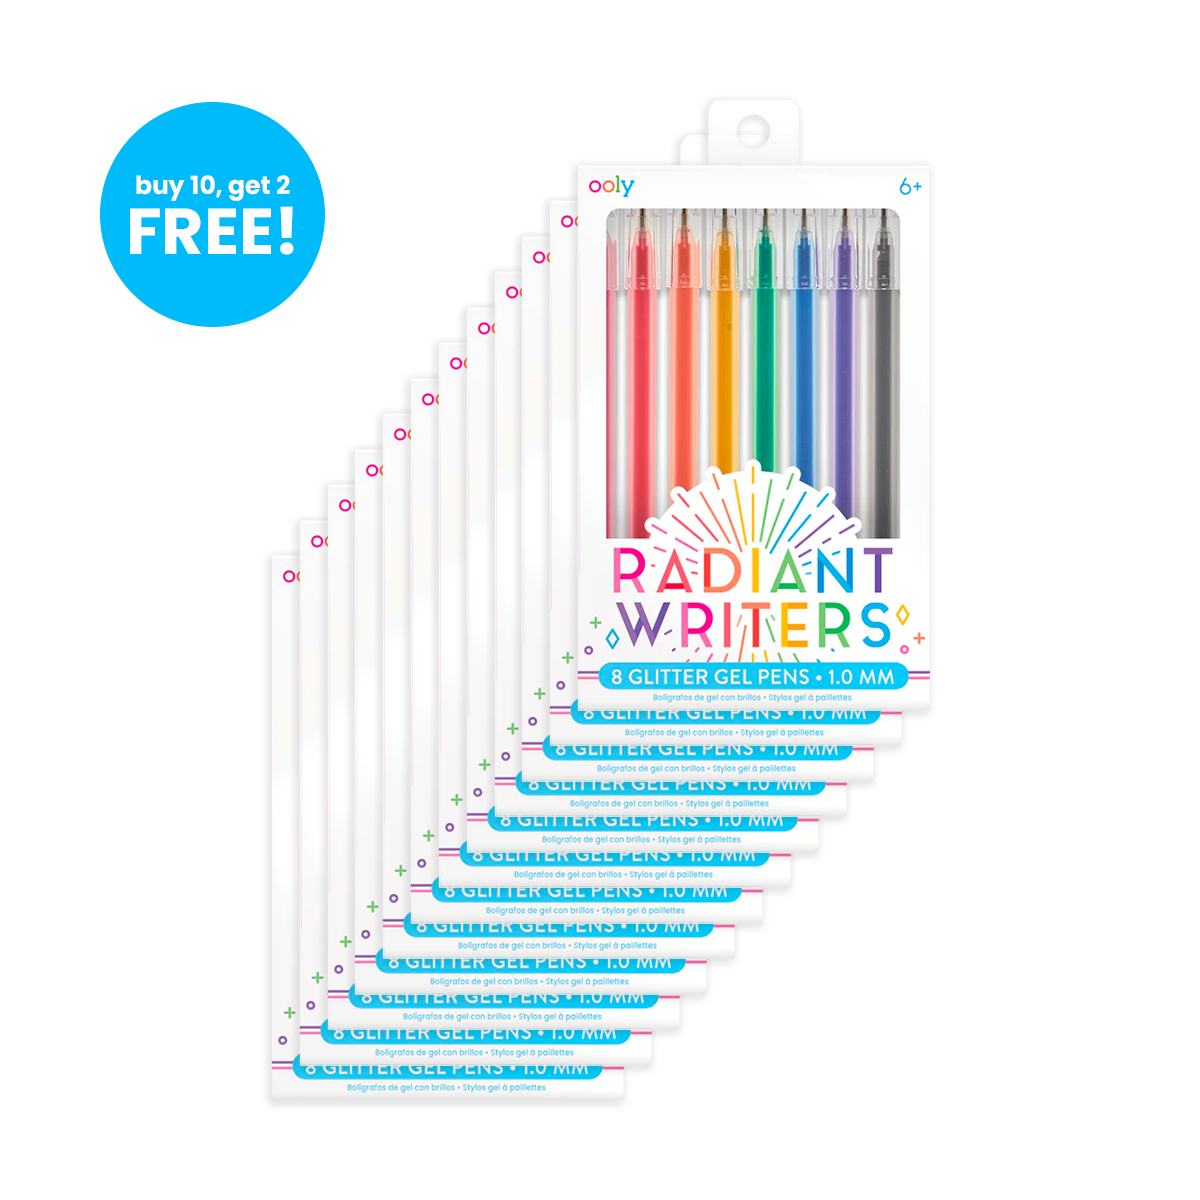 A bundle of 12 sets of Radiant Writers Gel Pens